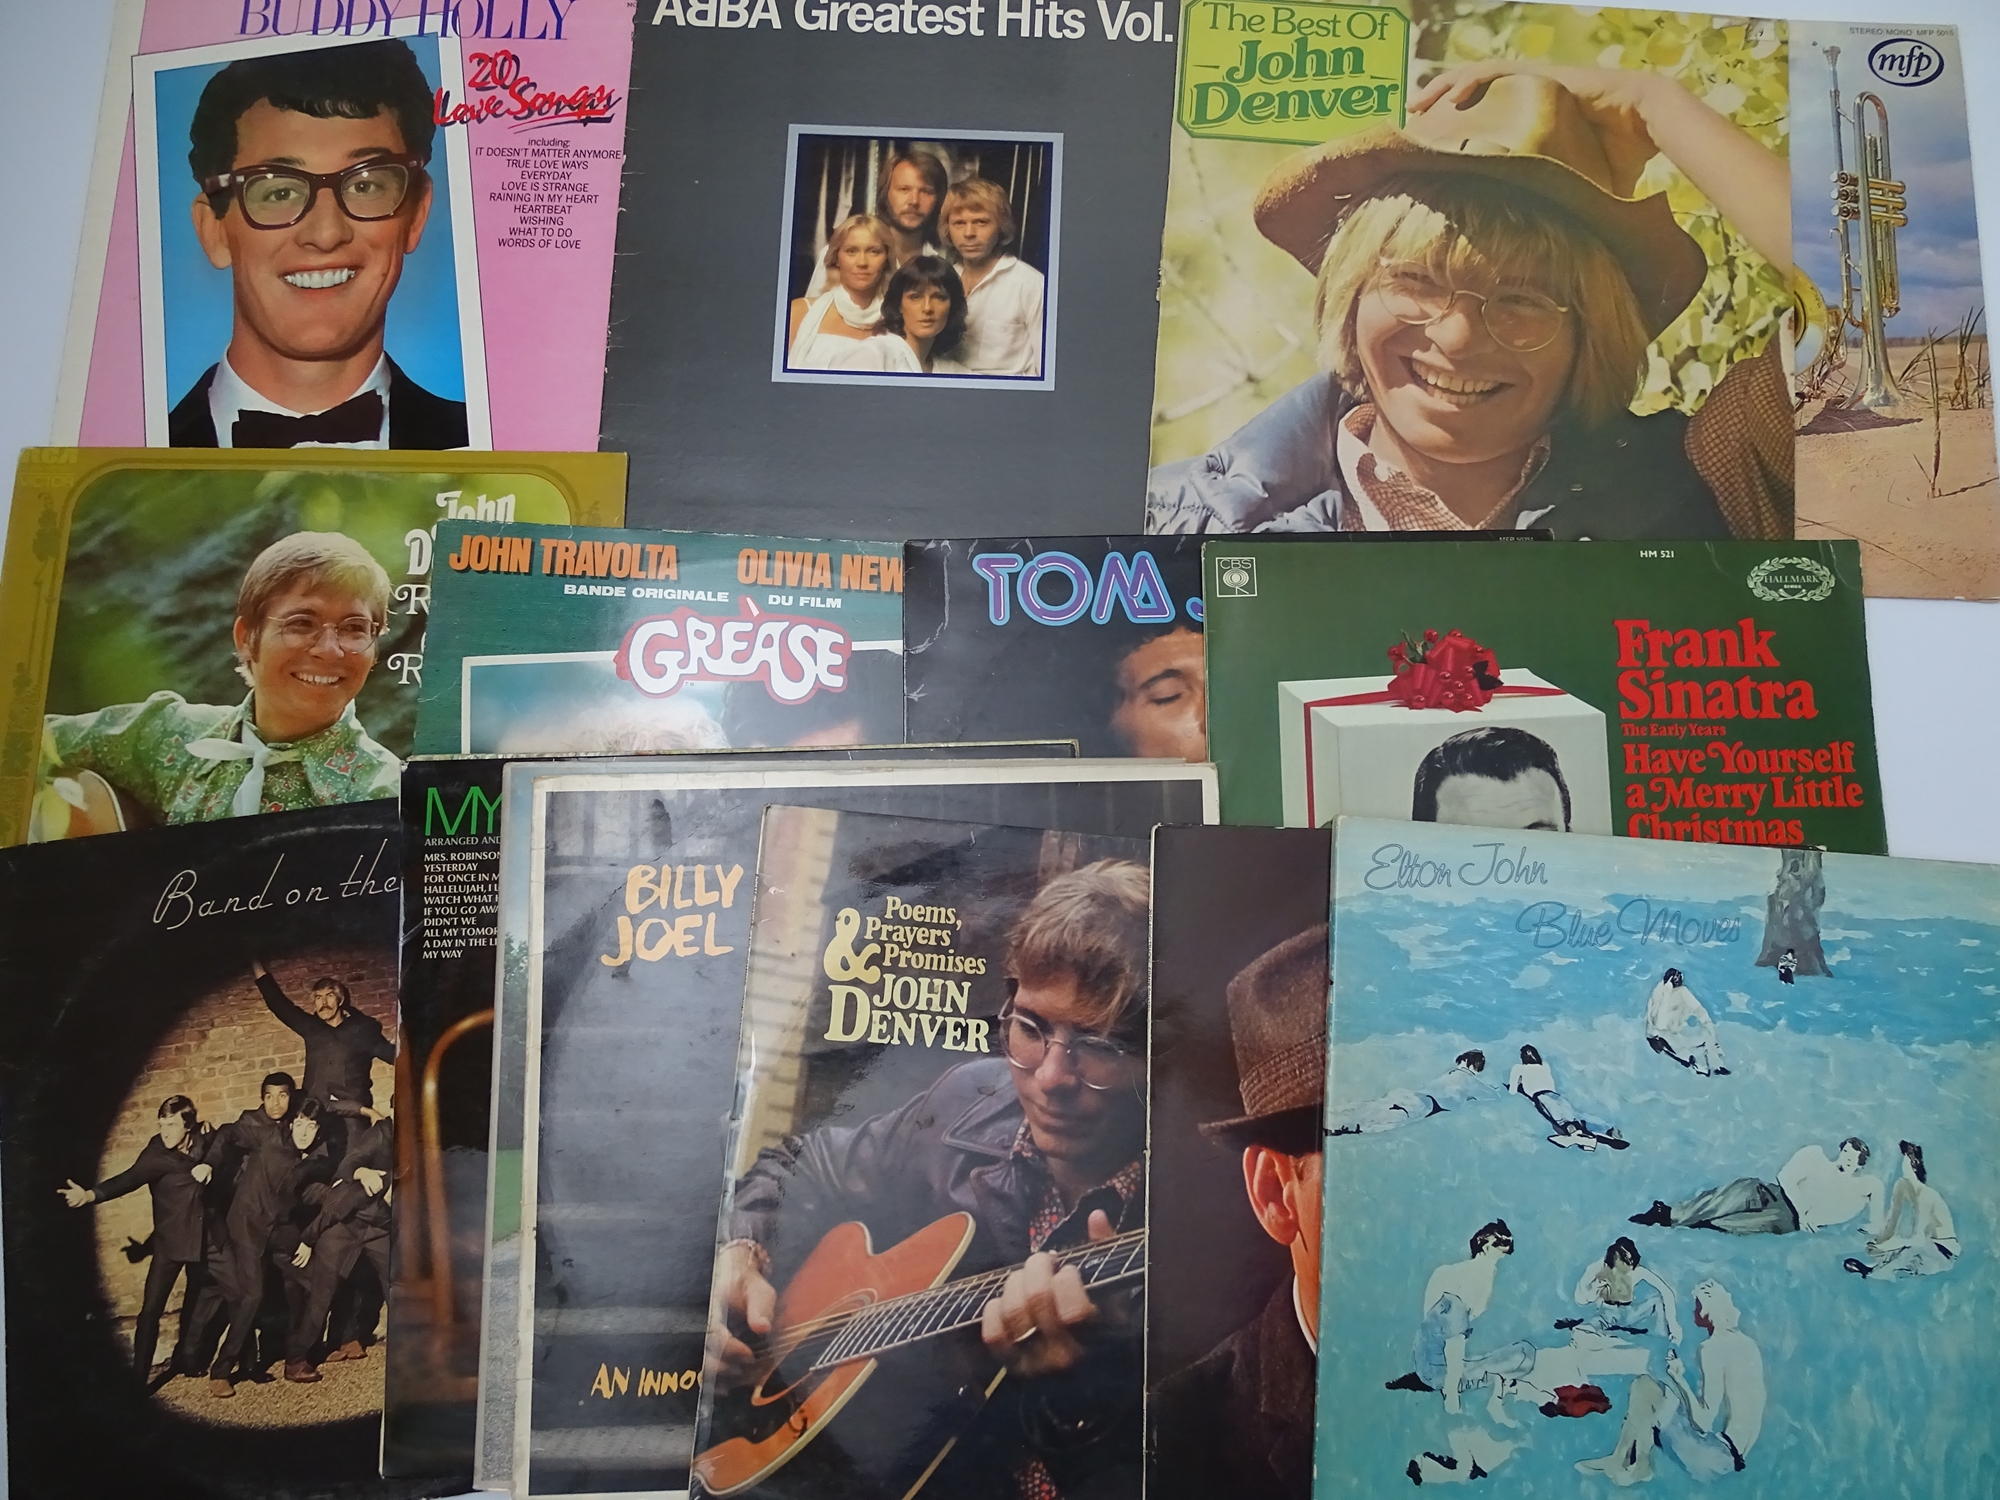 VINYL: A group of vinyl LPs and album records - To include: JOHN DENVER; TOM JONES; FRANK SINATRA;